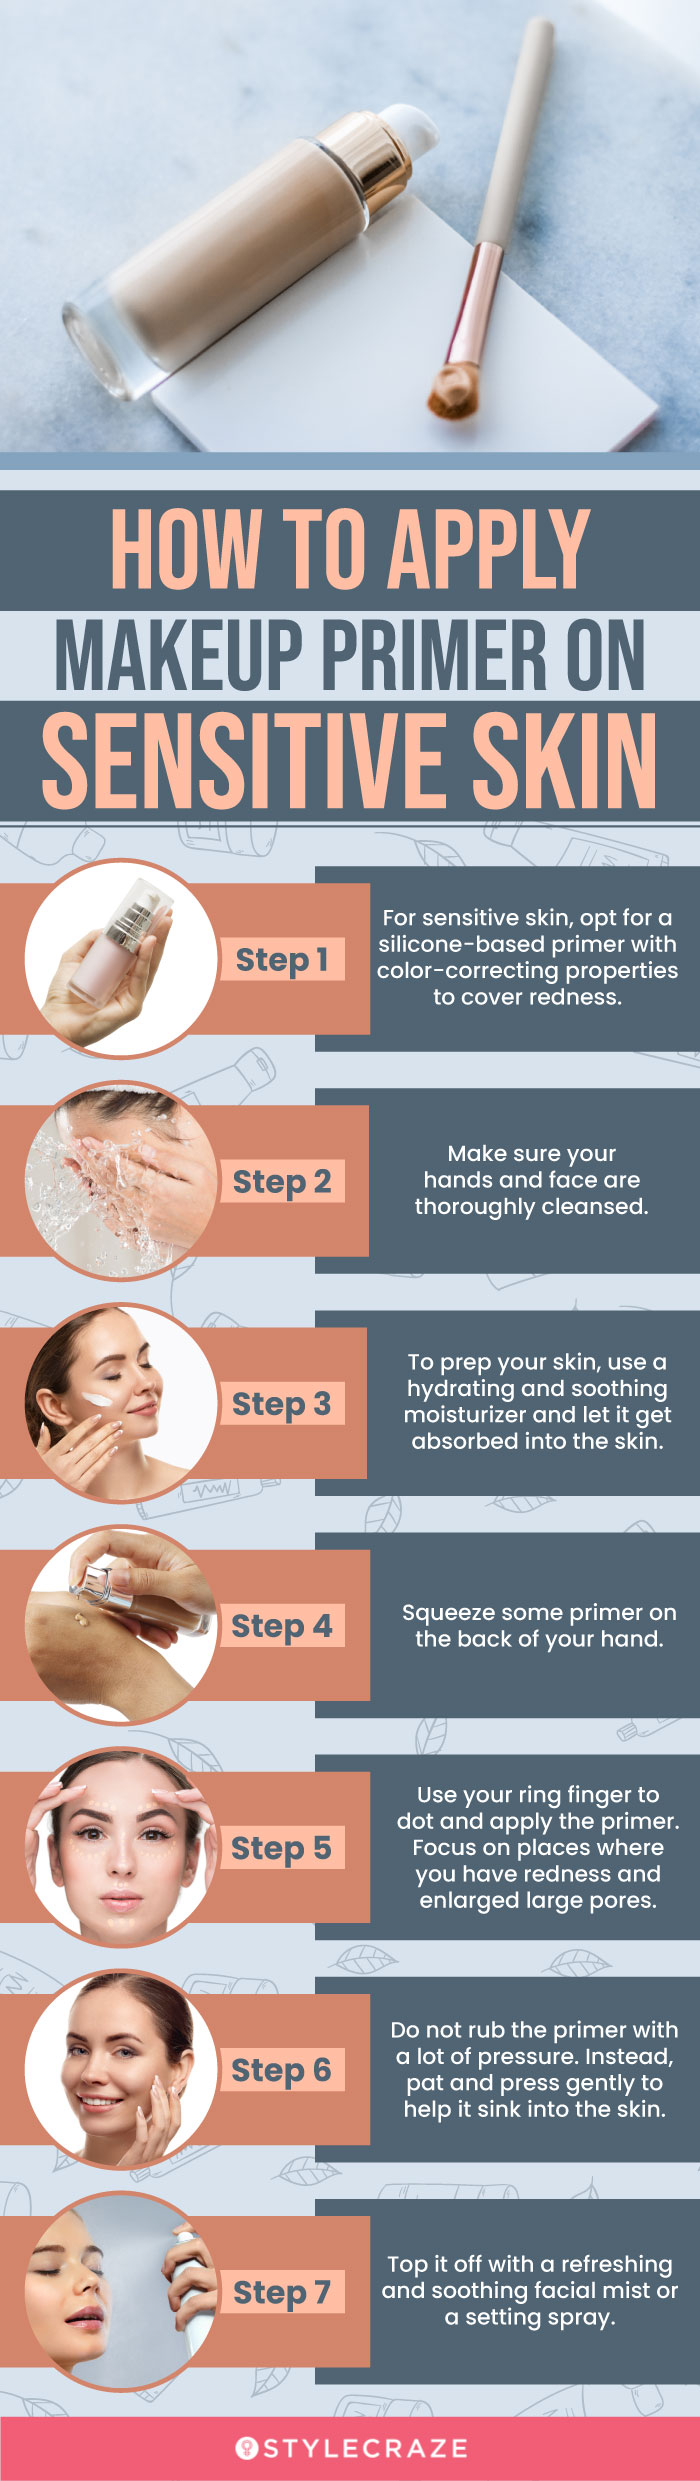 How To Apply Makeup Primer On Sensitive Skin